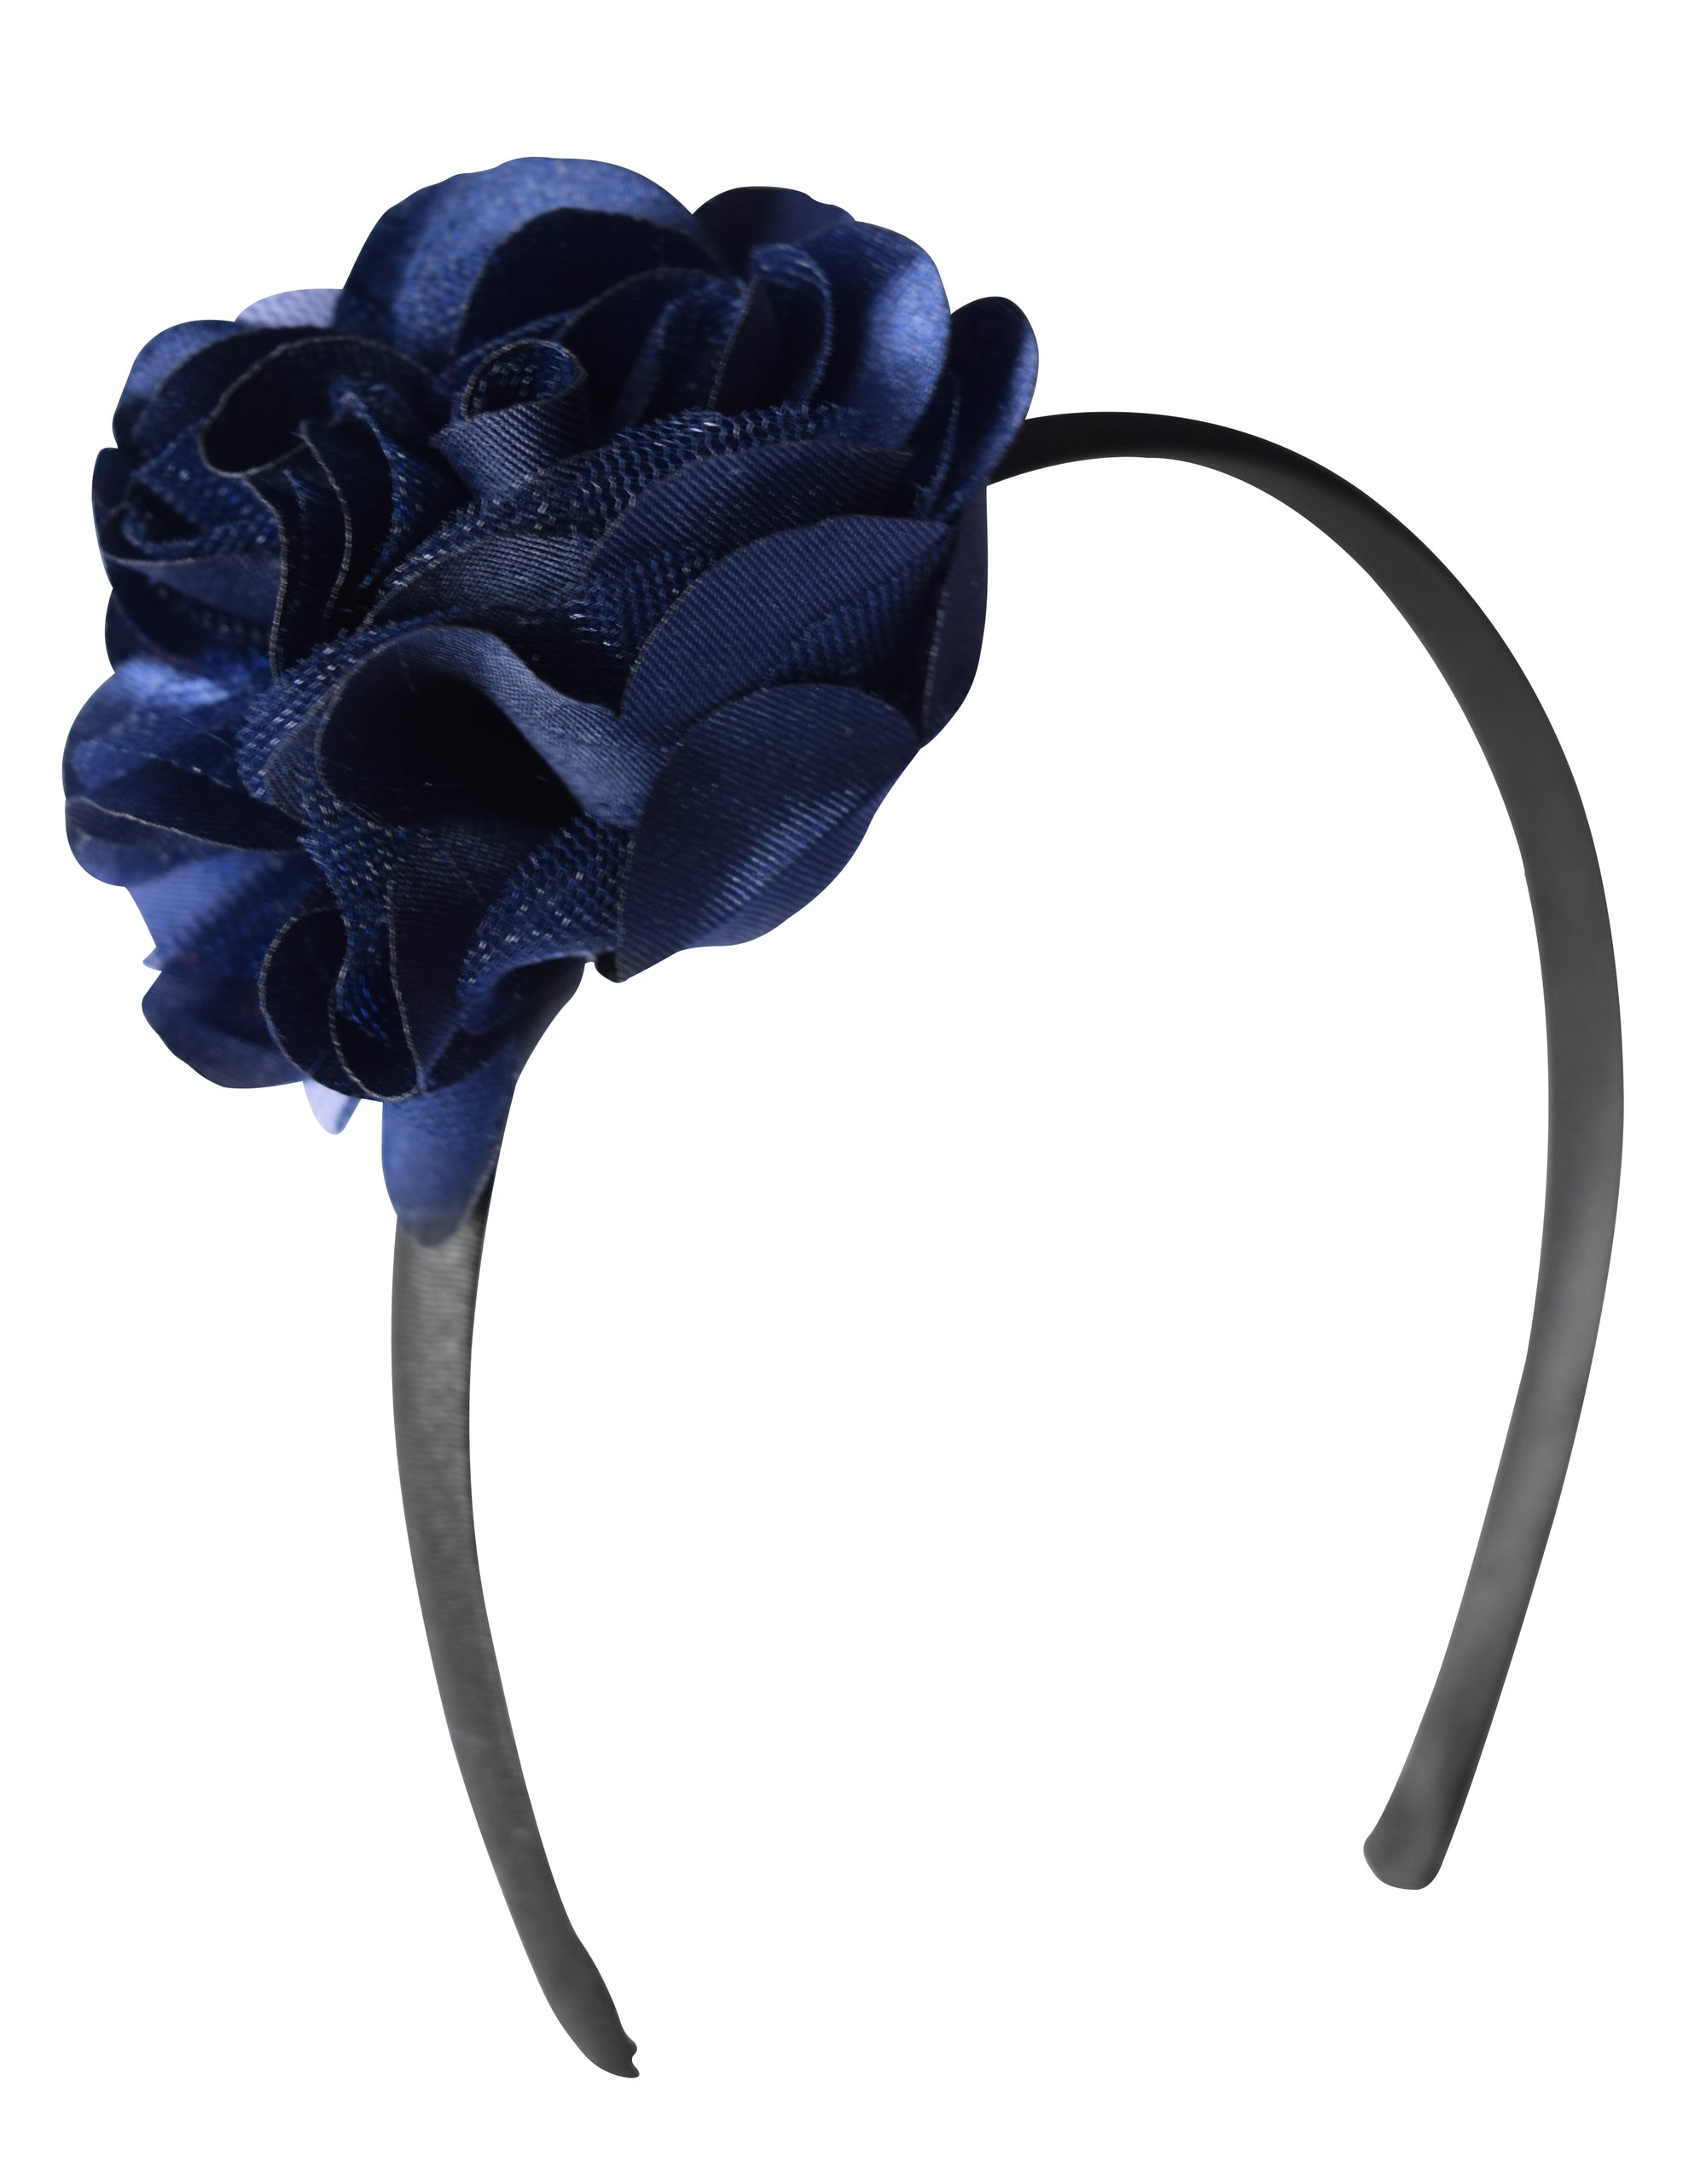 Kids Hairband with Navy Blue Big Flower on Black Satin